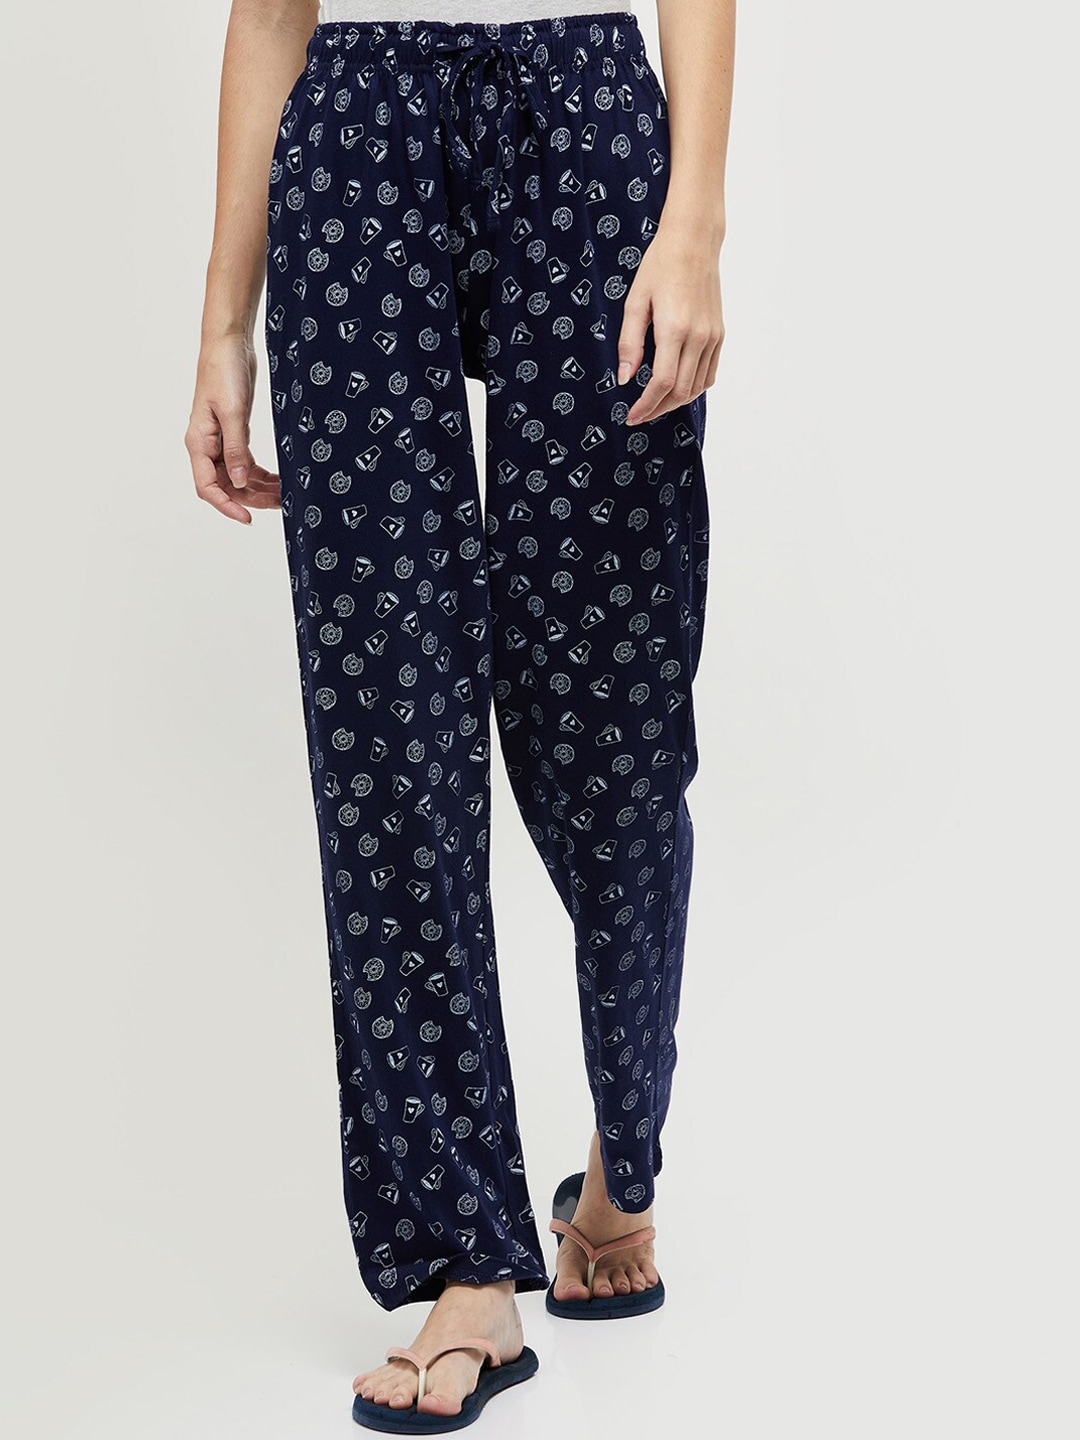 max Women Navy Blue Cotton Printed Pyjamas Price in India